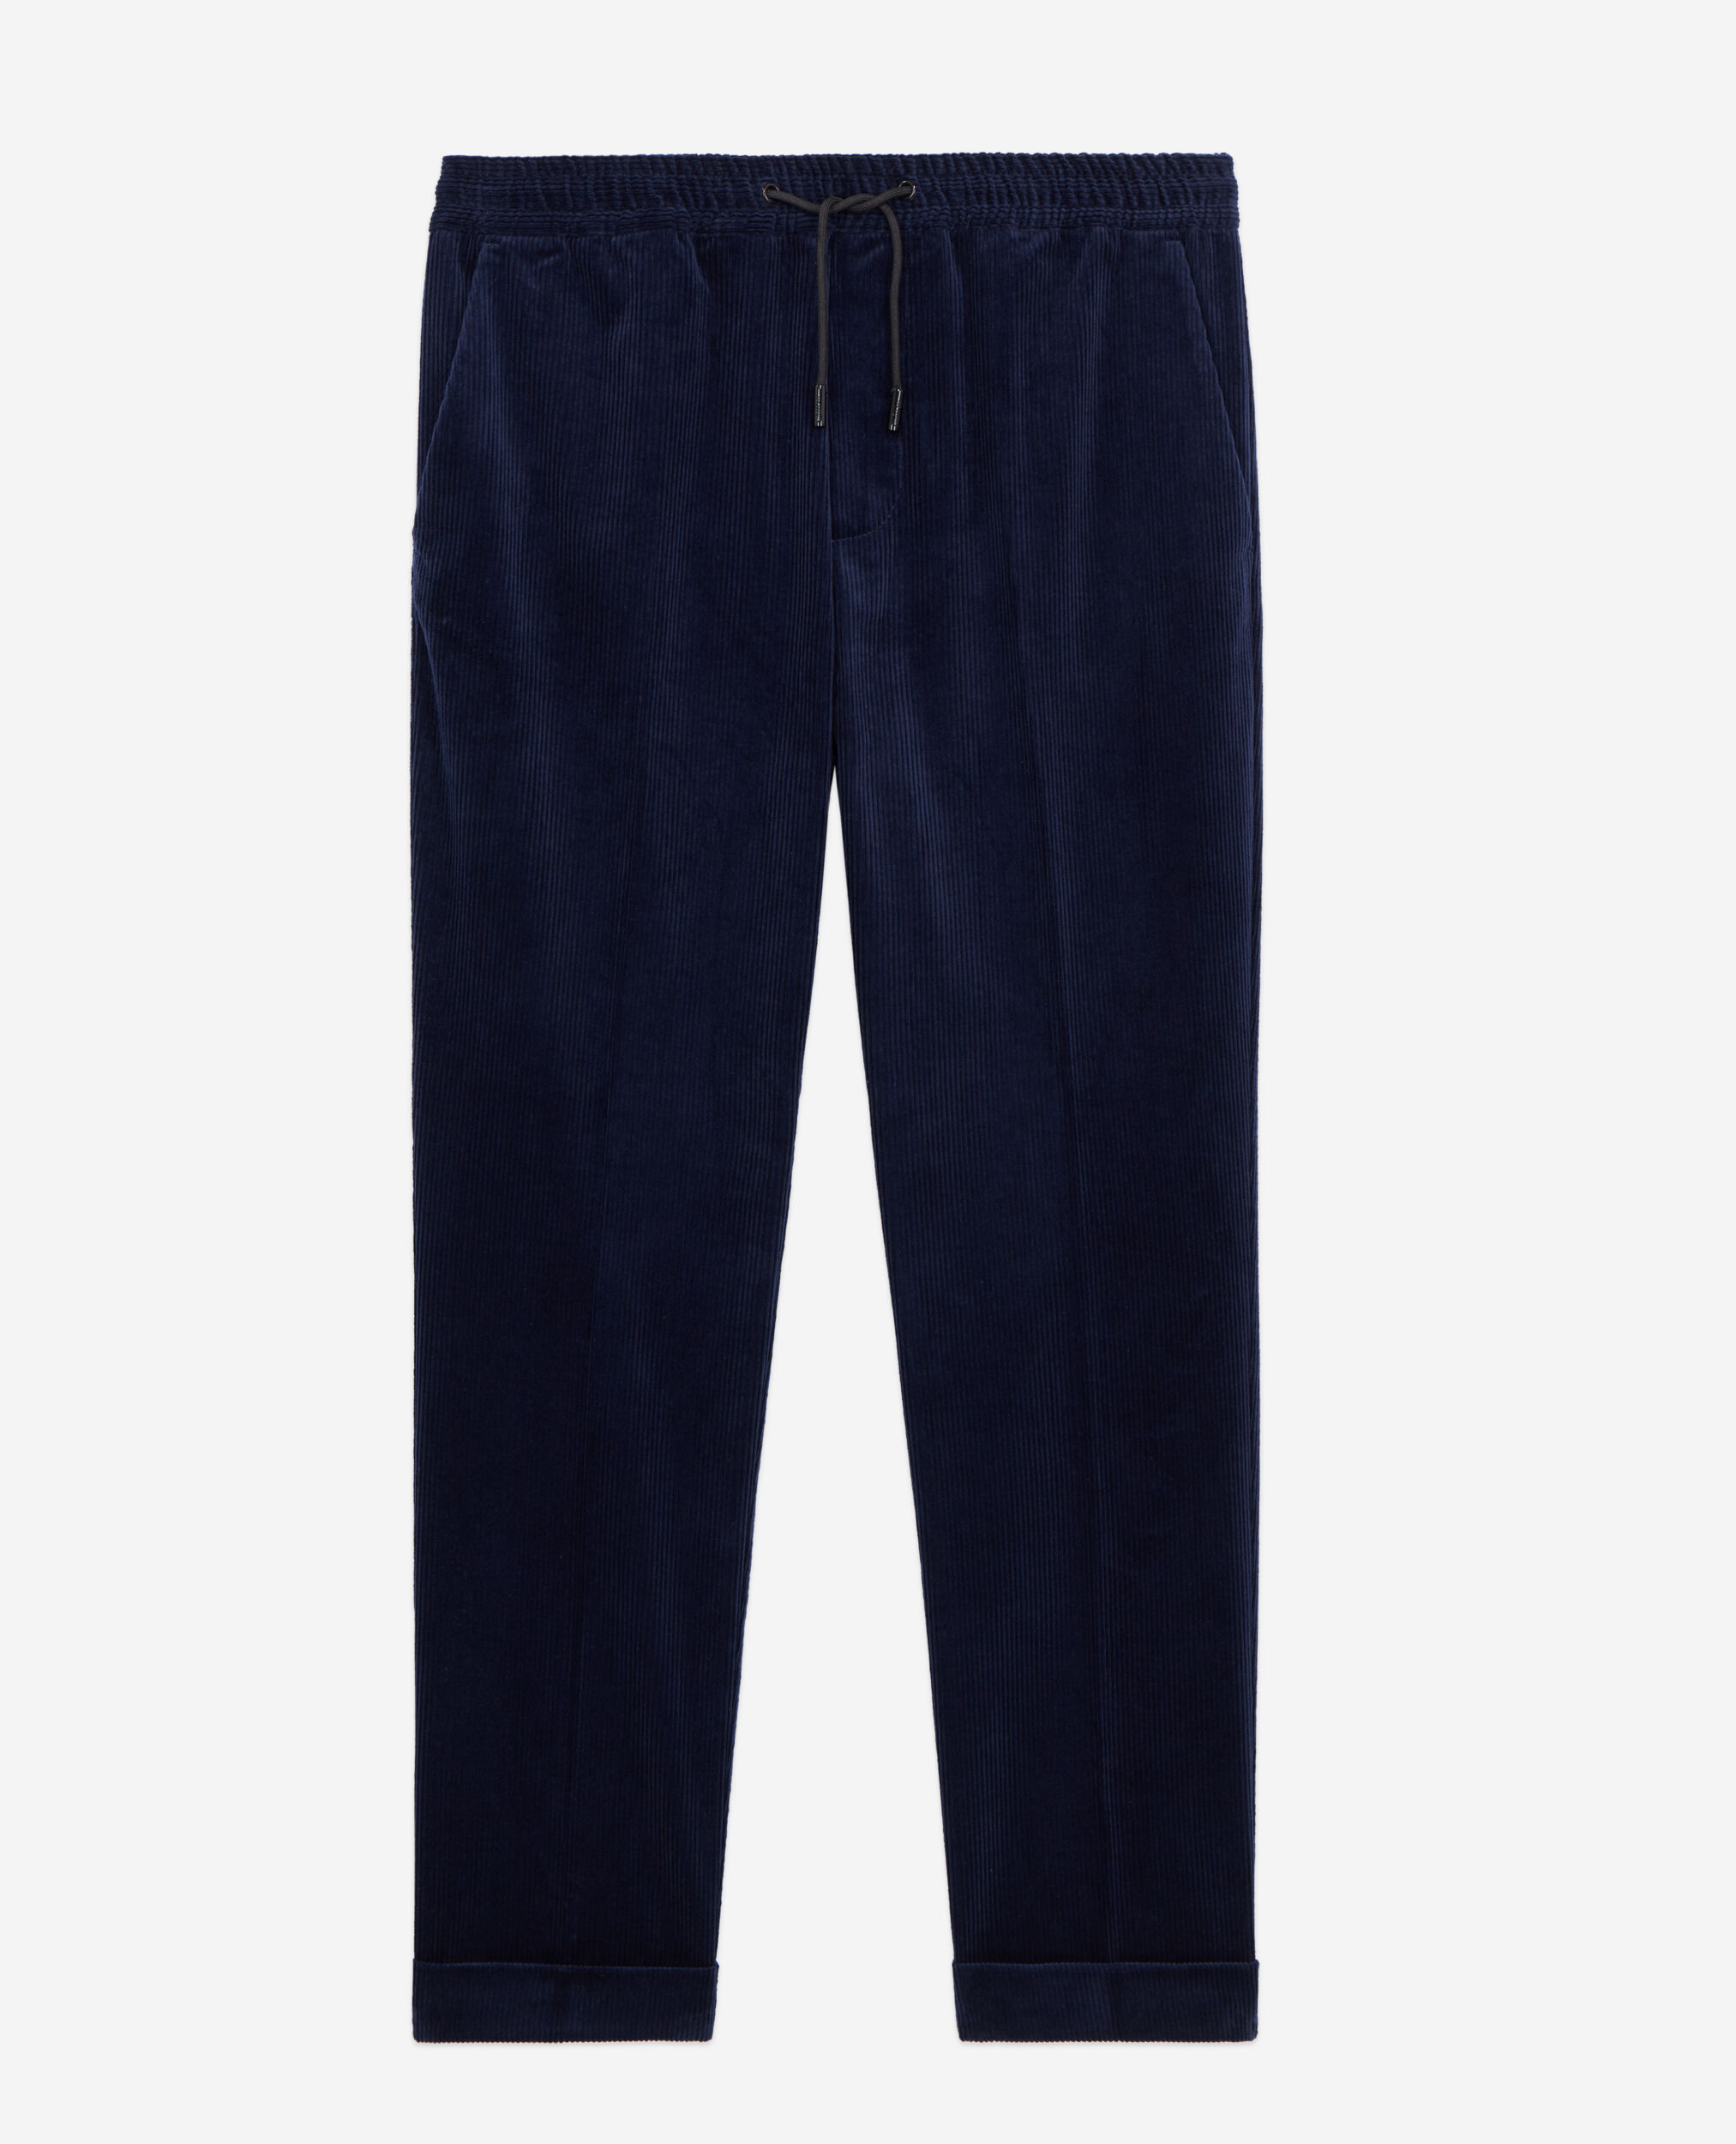 Pantalon bleu marine en velours côtelé, NAVY, hi-res image number null